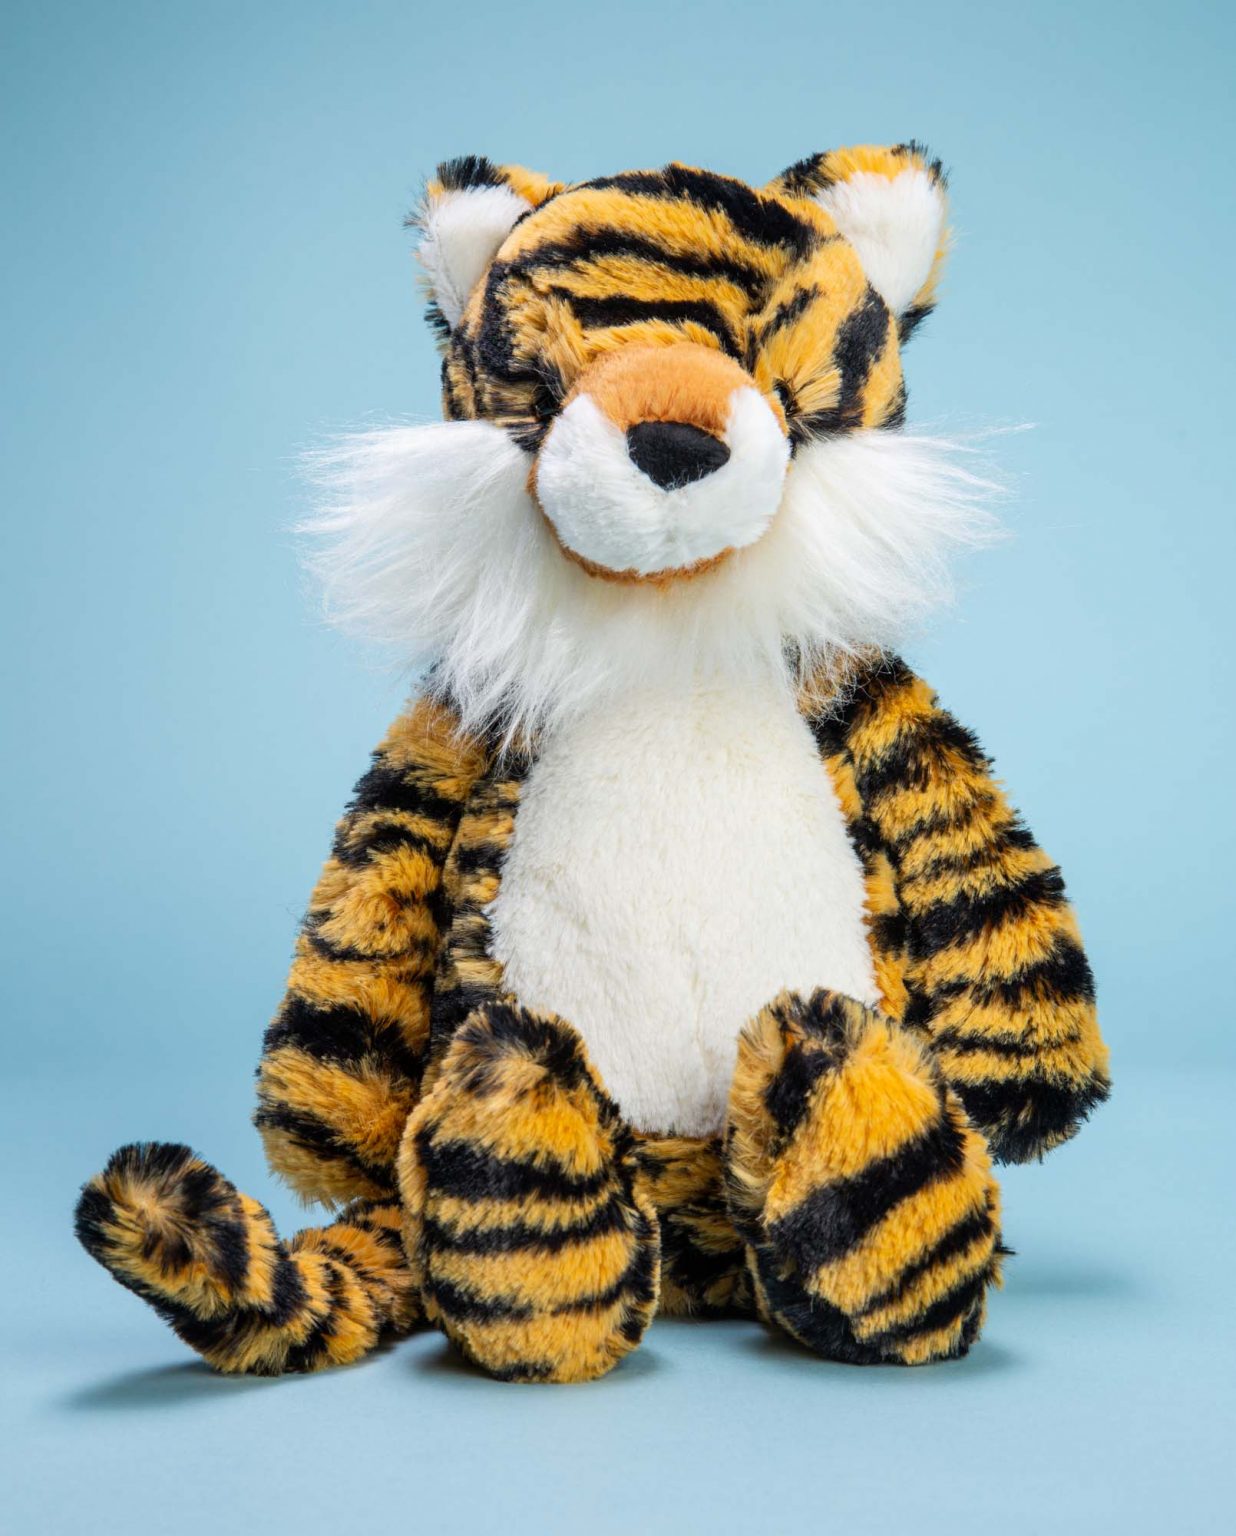 Tiger cuddly soft toy gift